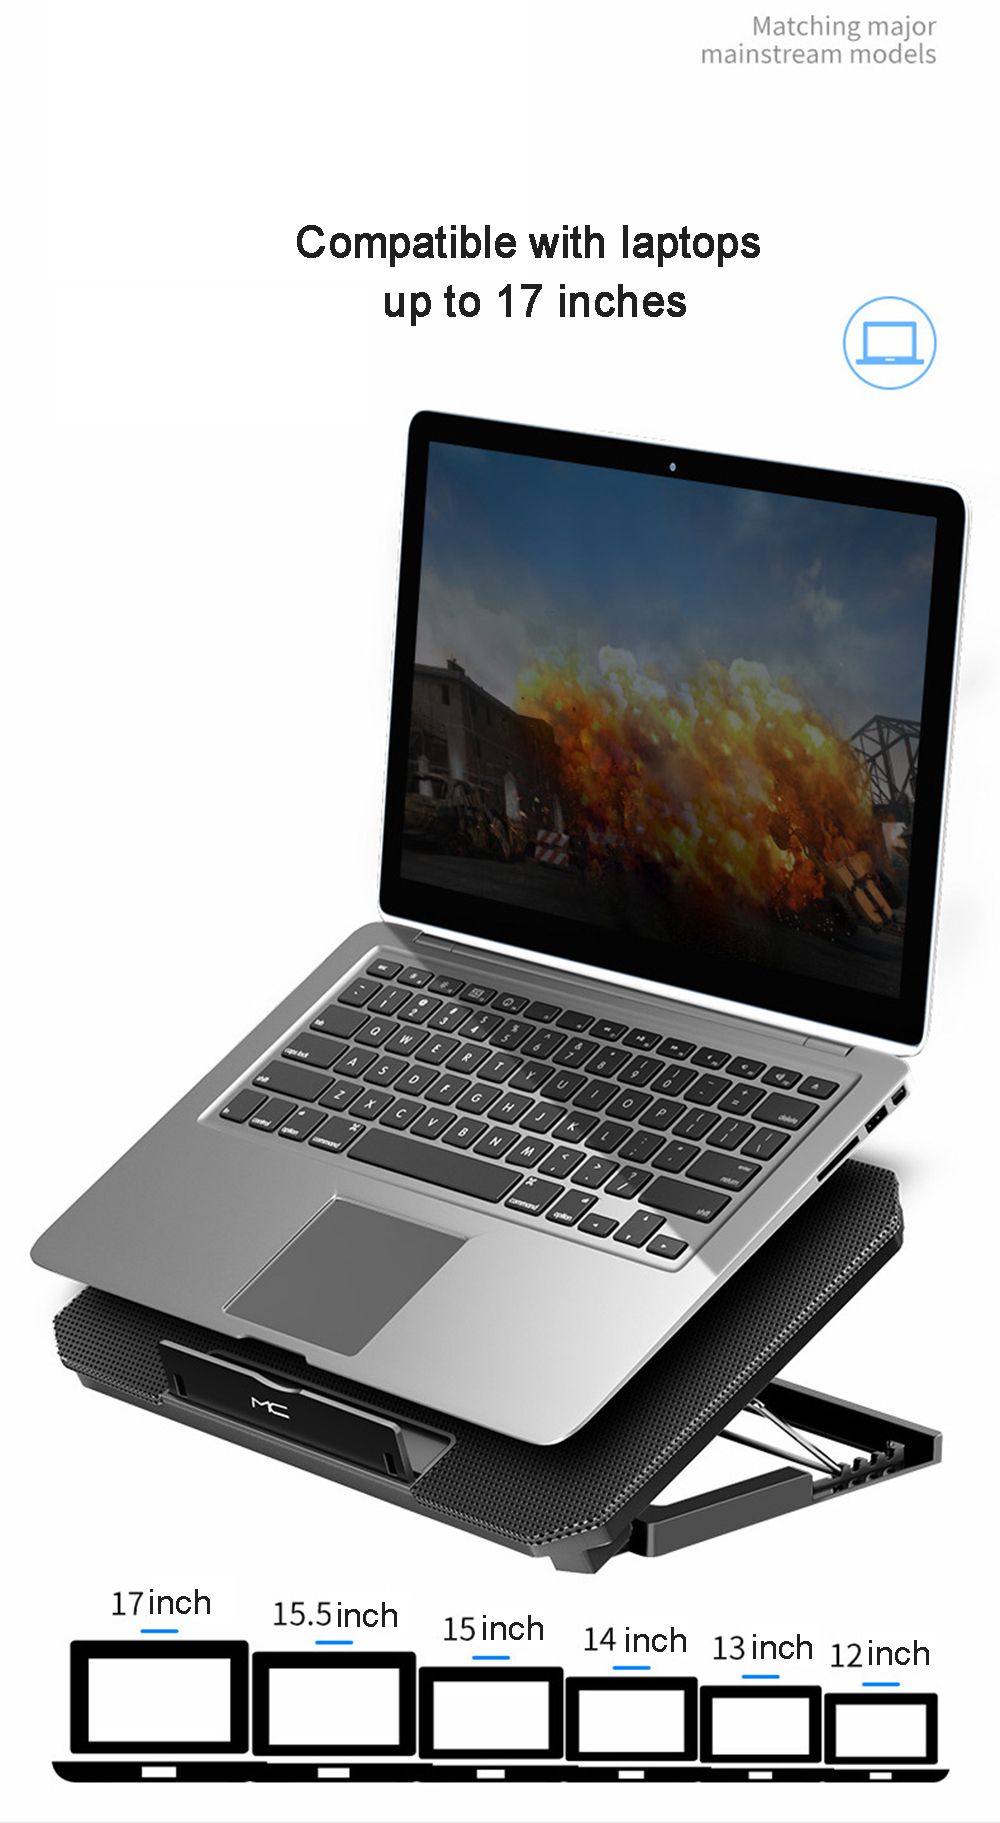 MC-Q100-Notebook-Computer-Radiator-Laptop-Stand-Cooling-Pad-2-Fans-USB-Adjustable-Heightening-Liftin-1723997